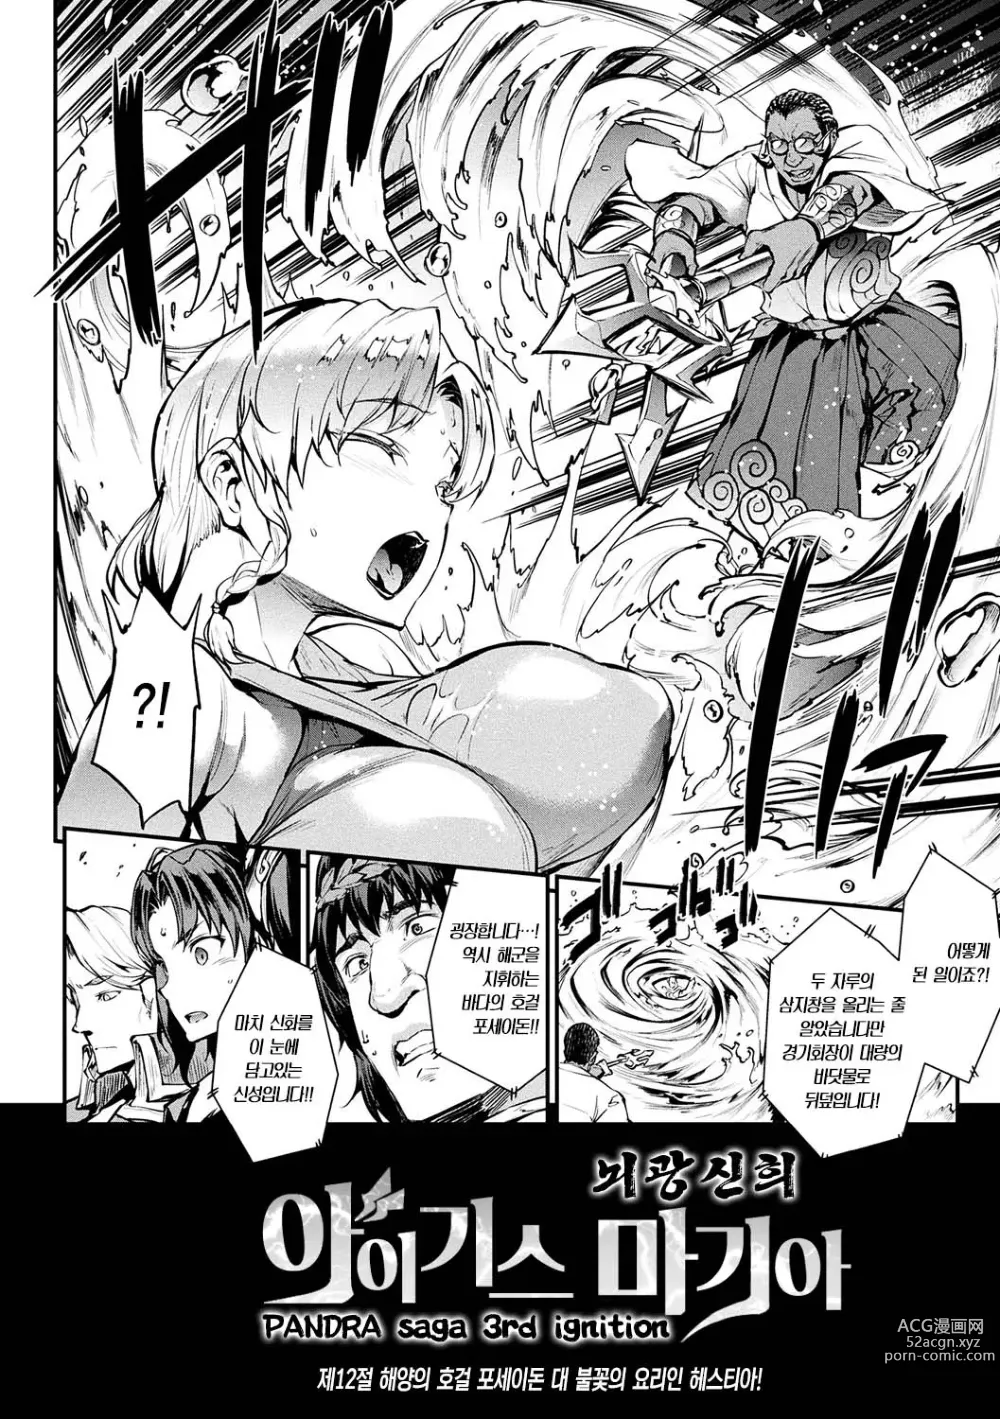 Page 2 of manga 뇌광신희 아이기스 마기아 -PANDRA saga 3rd ignition- 제 12편